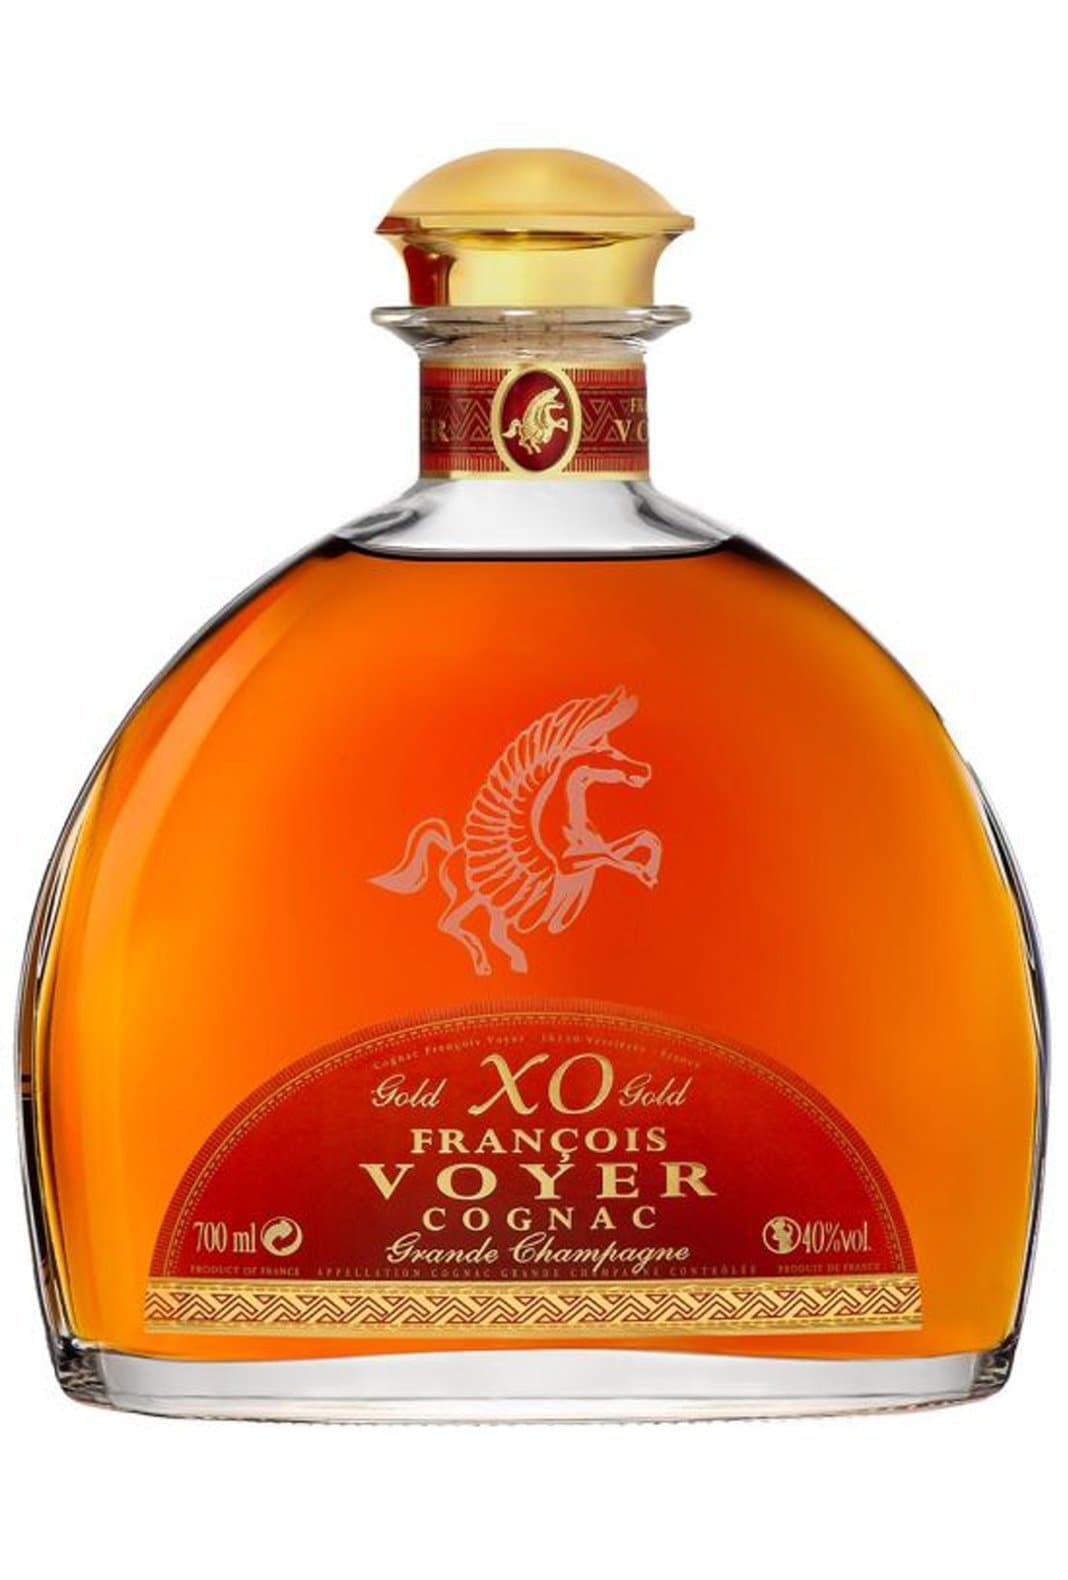 Francois Voyer XO Gold 20-30 years Grande Champagne Cognac Carafe 40% 700ml | Brandy | Shop online at Spirits of France